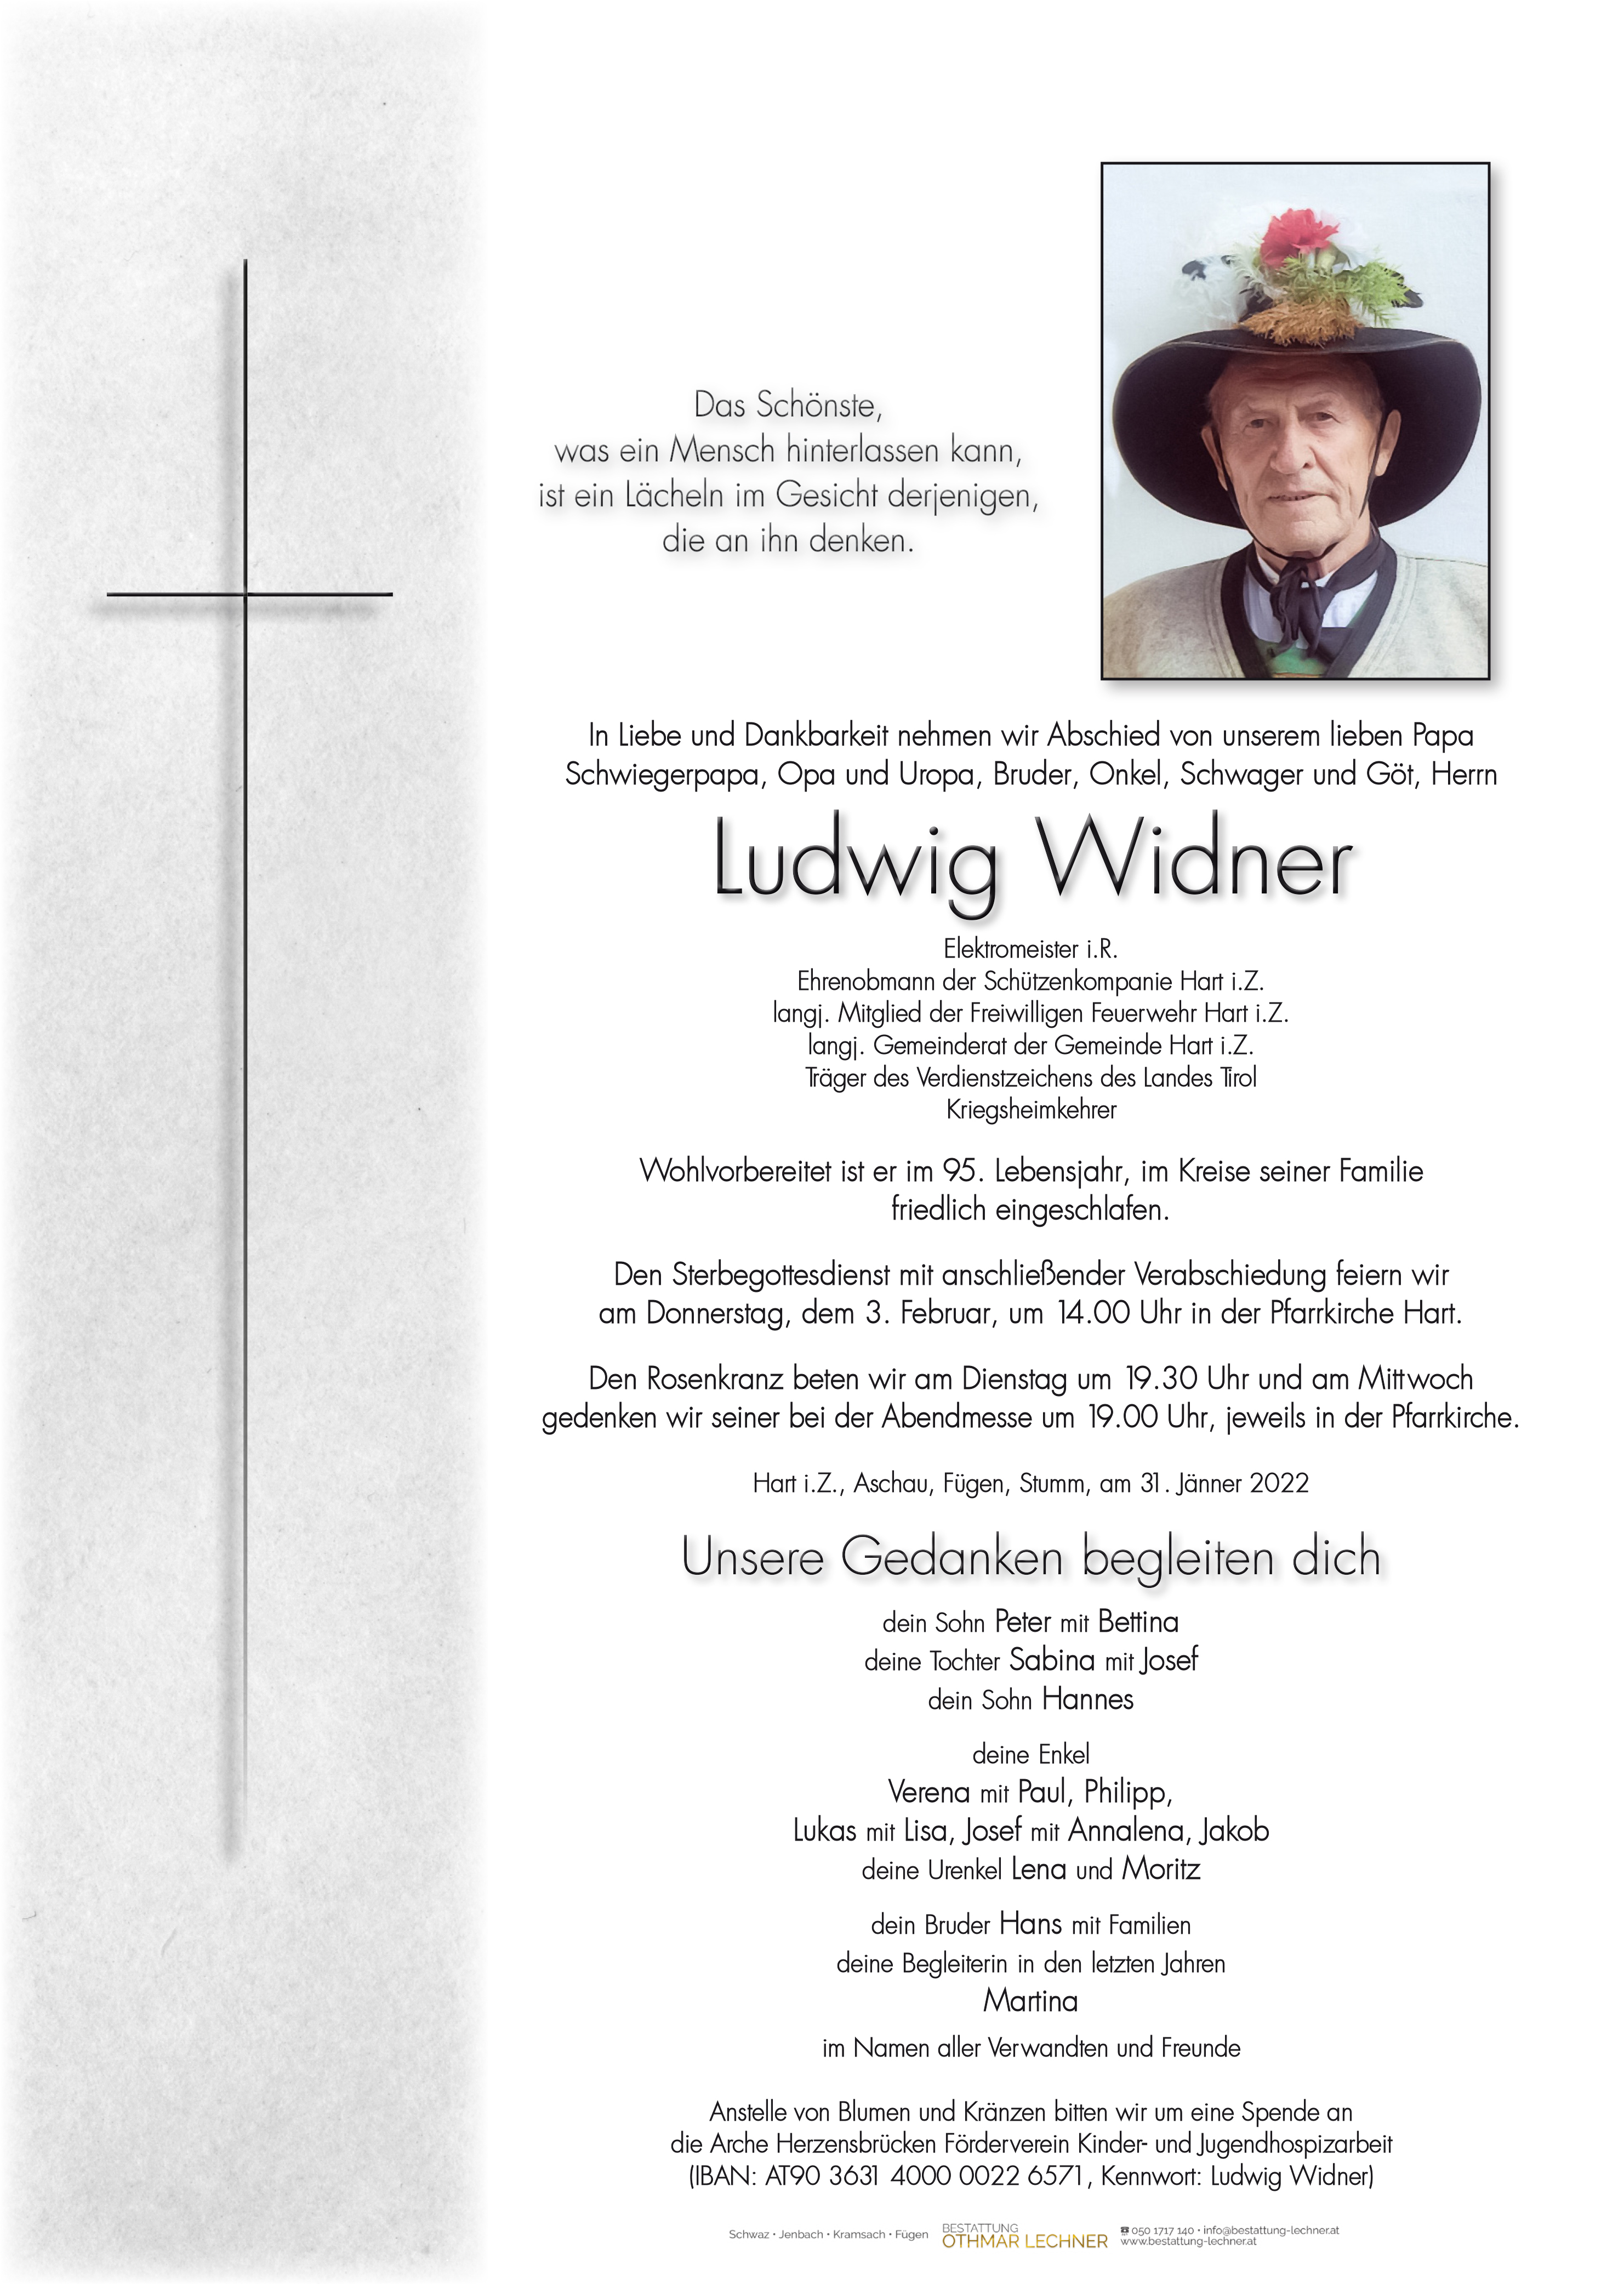 Ludwig Widner